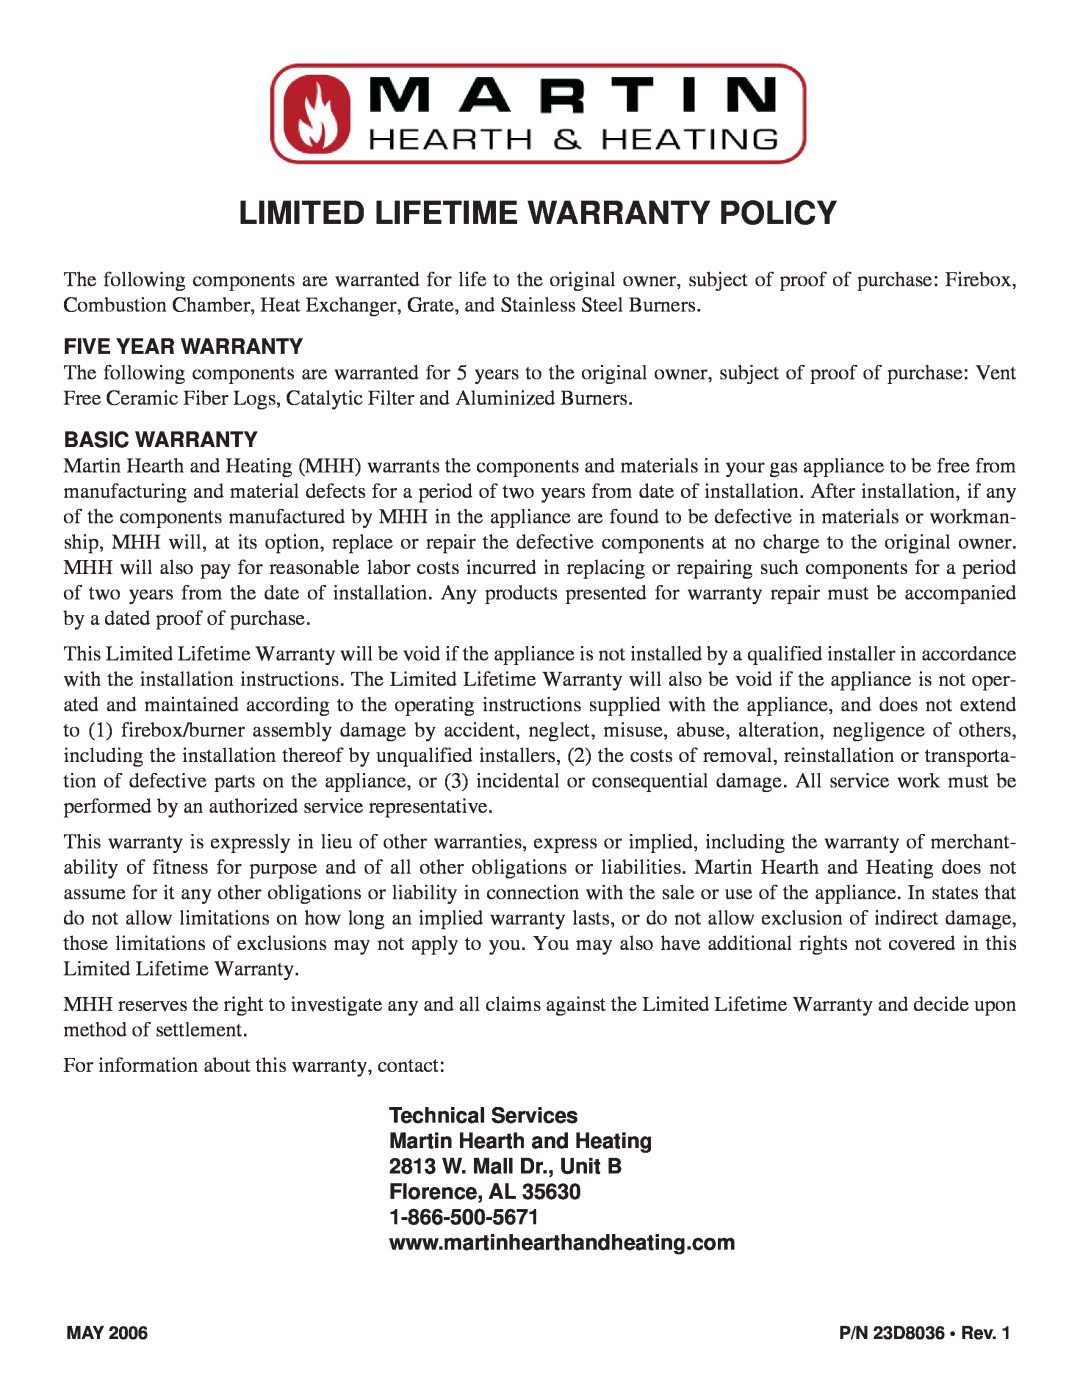 MartinLogan 33ISDG operating instructions Limited Lifetime Warranty Policy, Five Year Warranty, Basic Warranty 